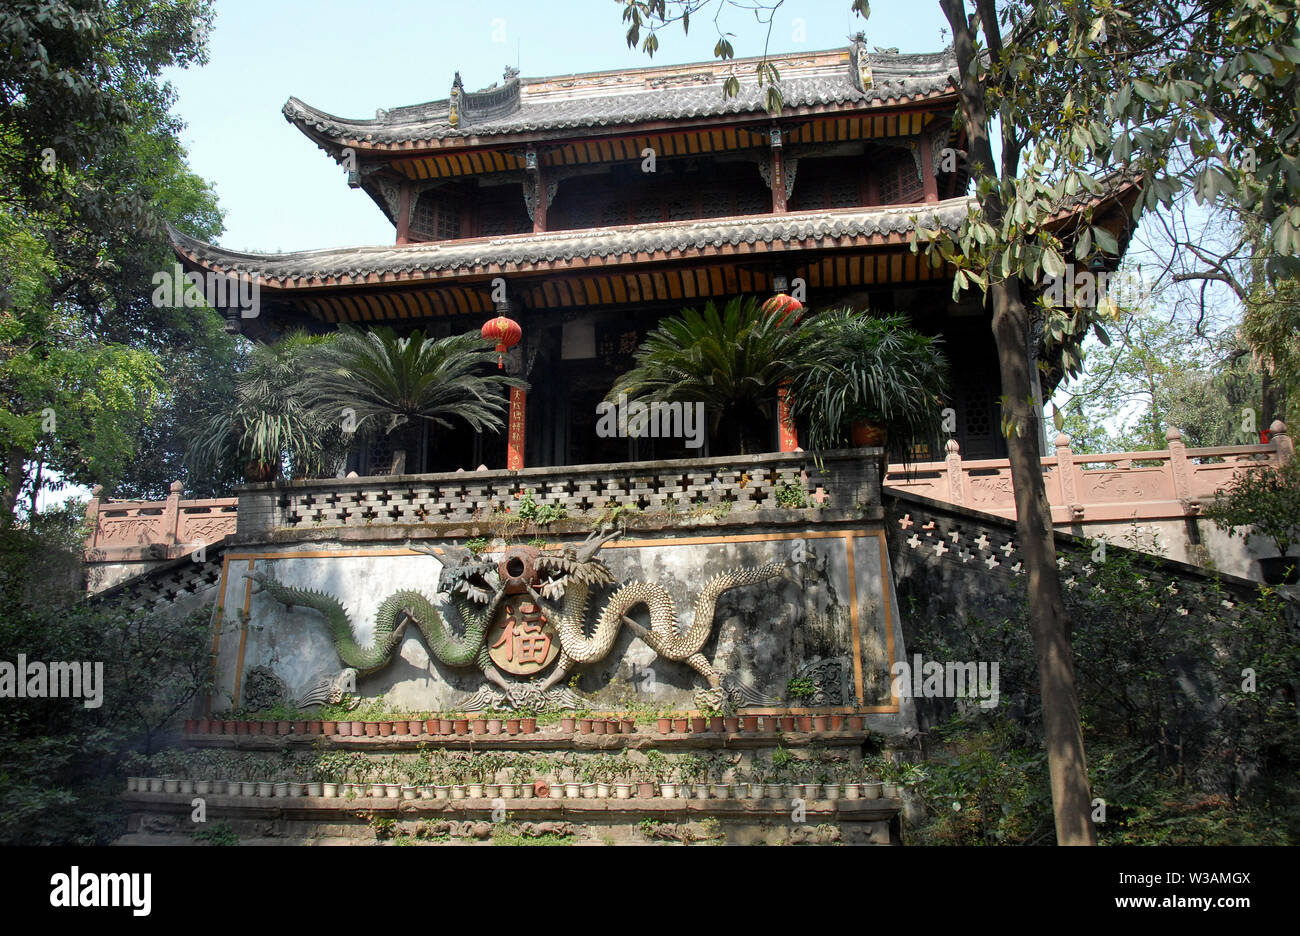 Die Halle der Tang Kaiser am Grünen Ram Tempel oder Grünen Ziege Tempel in Chengdu, China. Auch die Grüne Ram oder eine Ziege, zum Kloster. Ein Chinesischer taoistischer Tempel Stockfoto